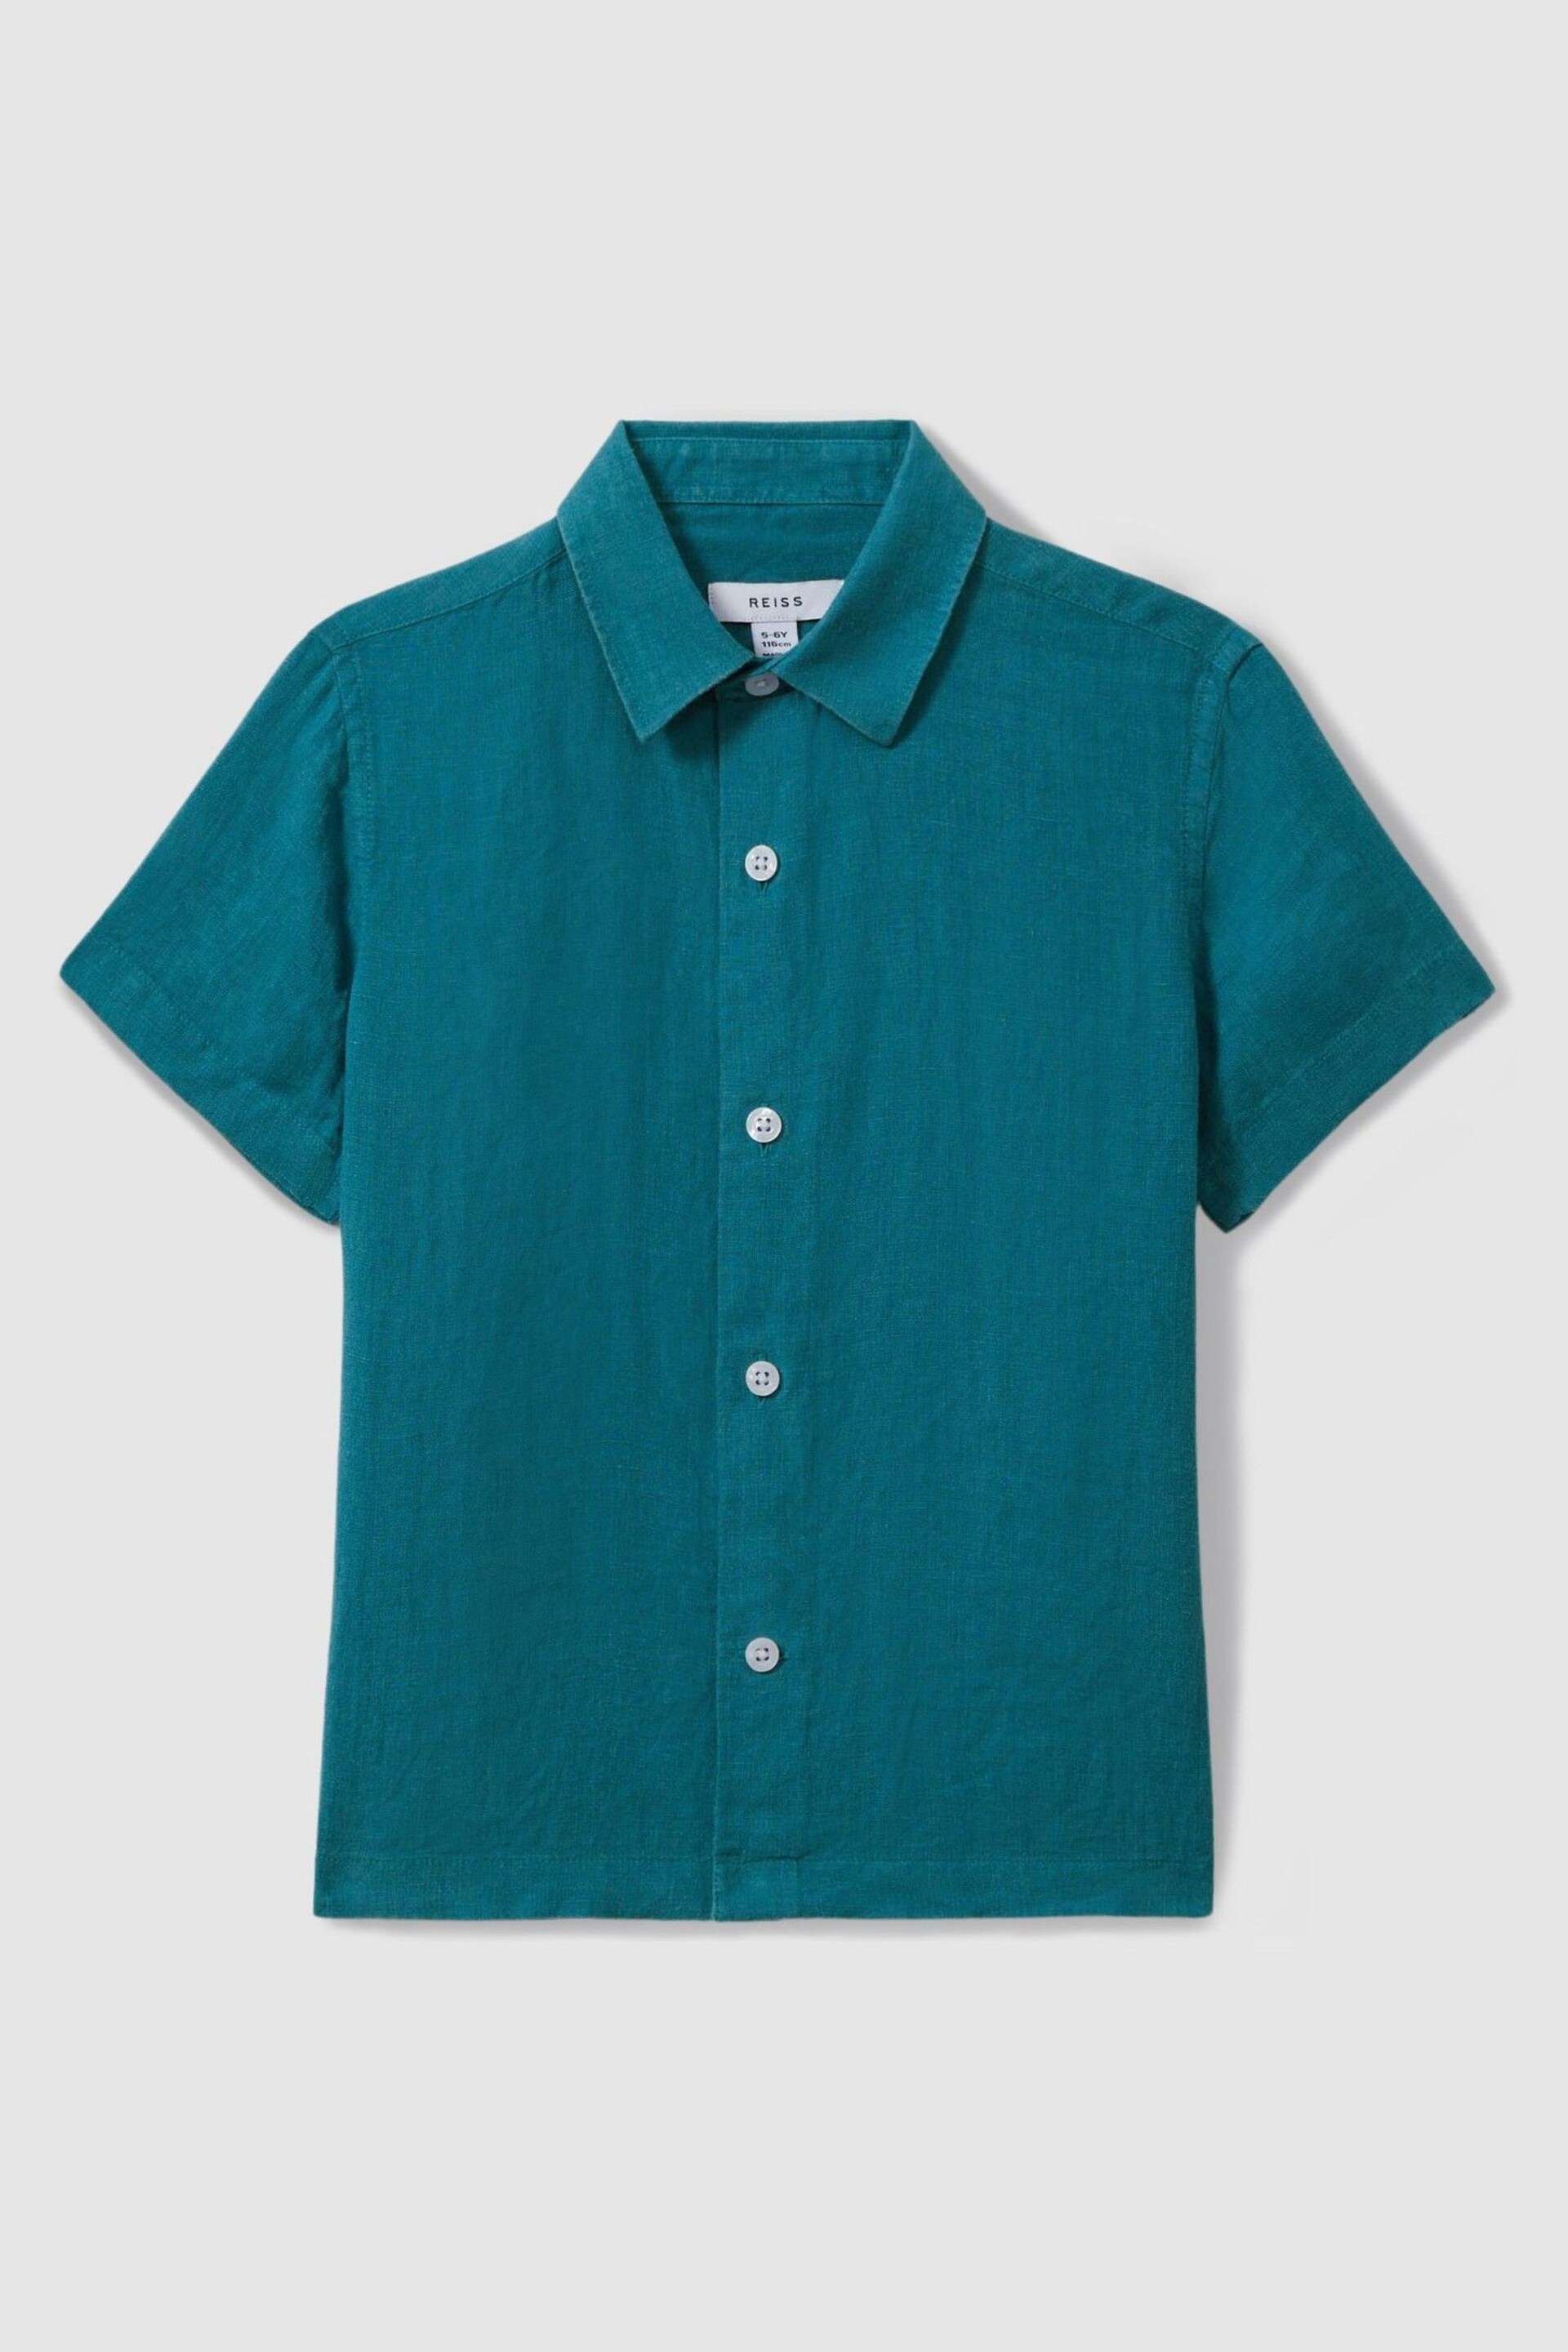 Reiss Seafoam Holiday Junior Short Sleeve Linen Shirt - Image 2 of 4